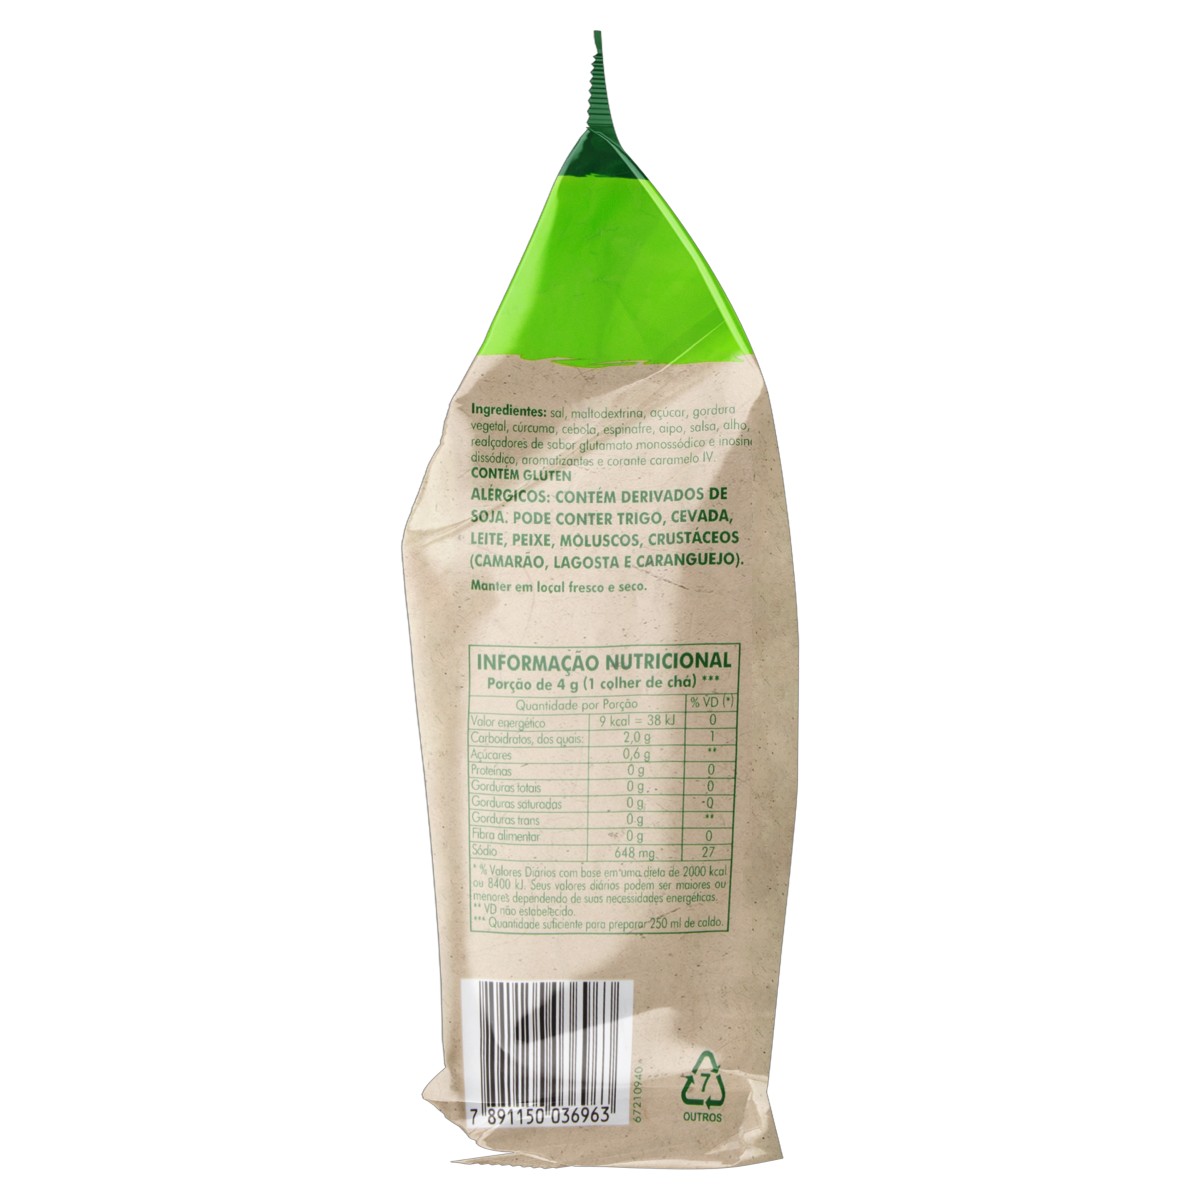 Caldo Knorr Legumes Bag 1,01kg